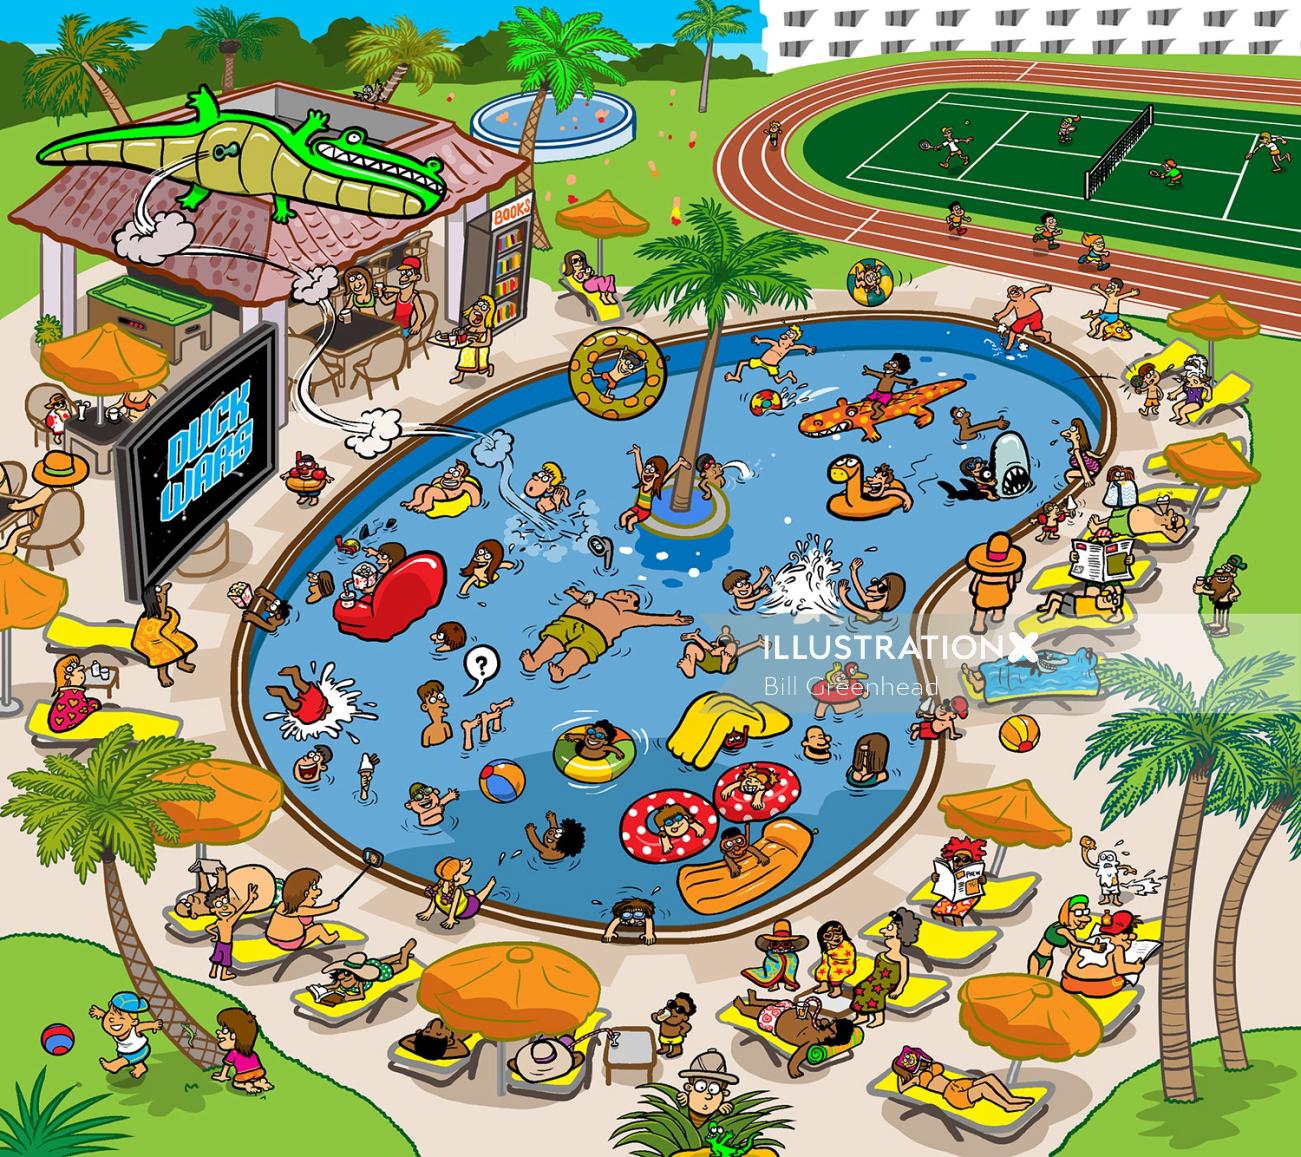 Thomas Cook swimming pool illustration
